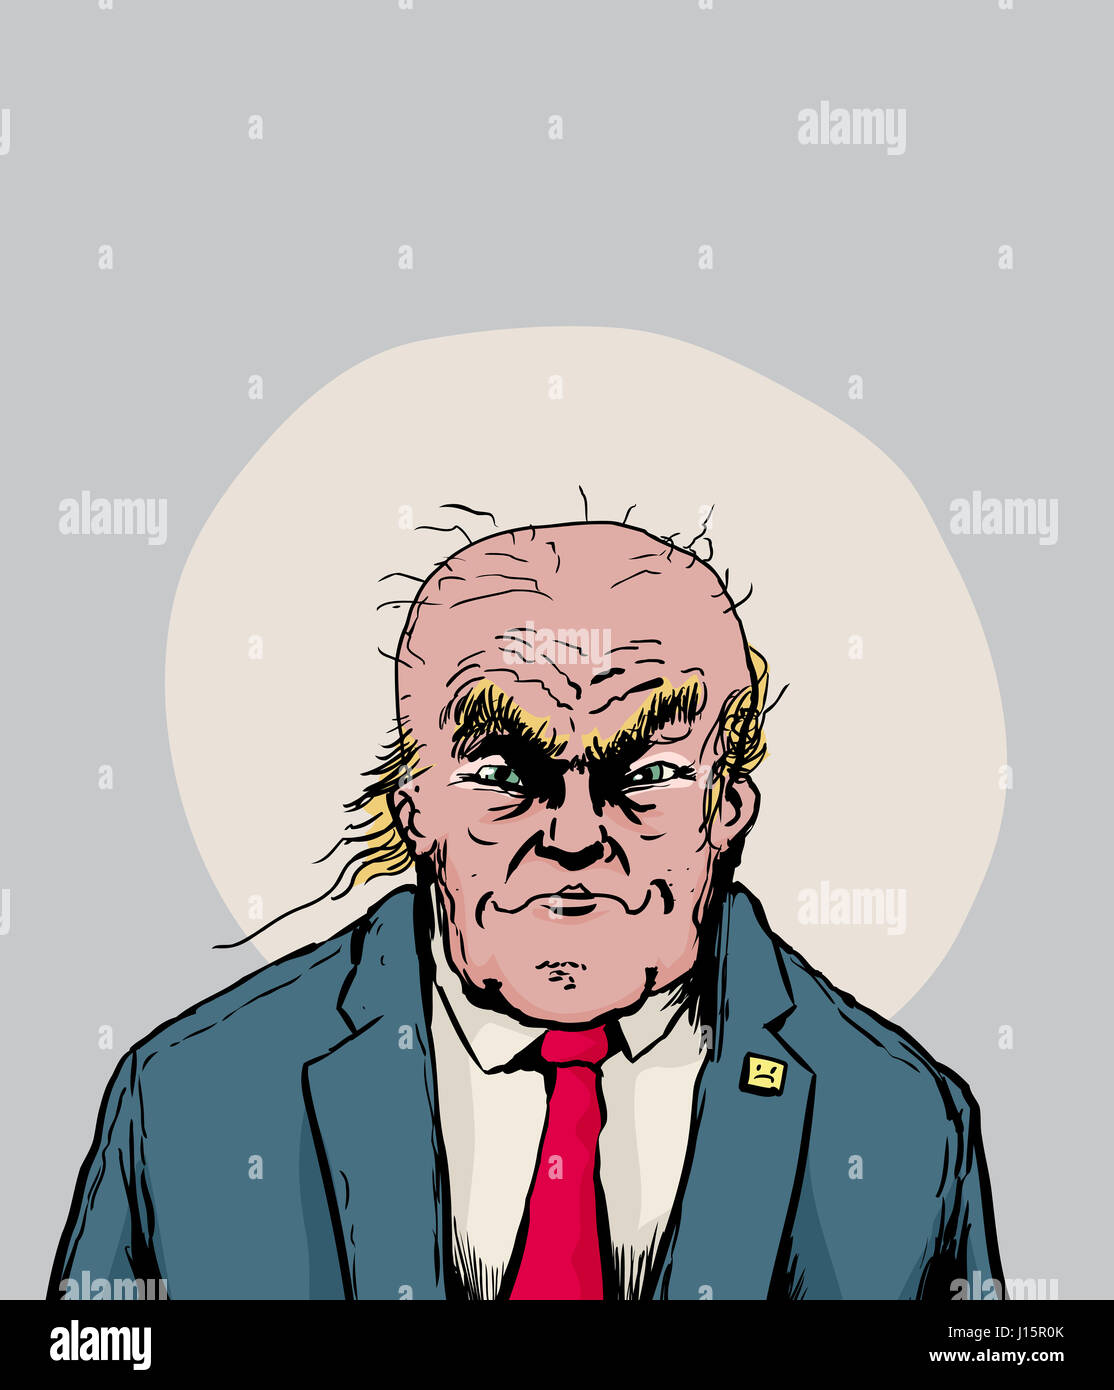 April 18, 2017. Caricature of smirking Donald Trump with balding head Stock Photo